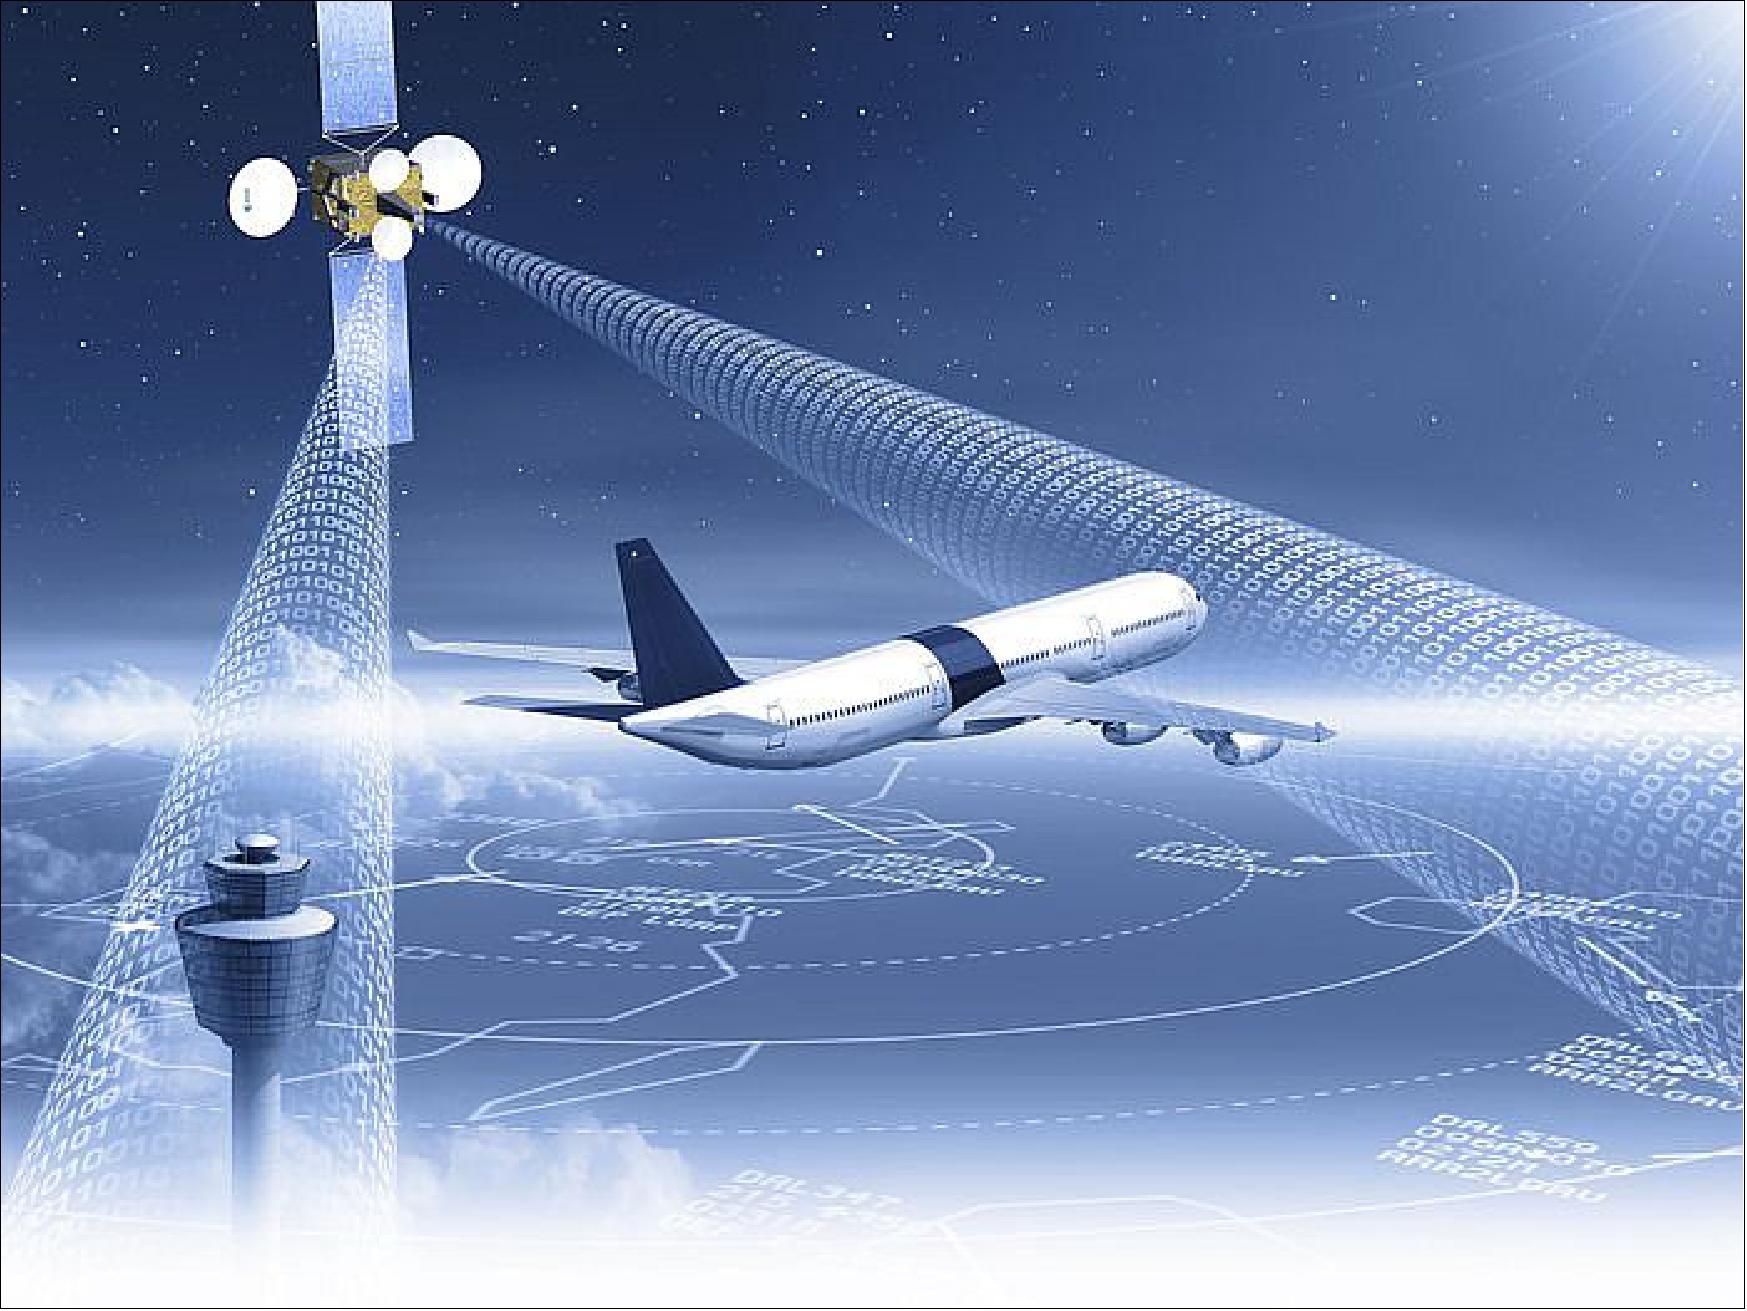 Figure 13: Schematic of digital data links via satellite in air traffic control (image credit: ESA)